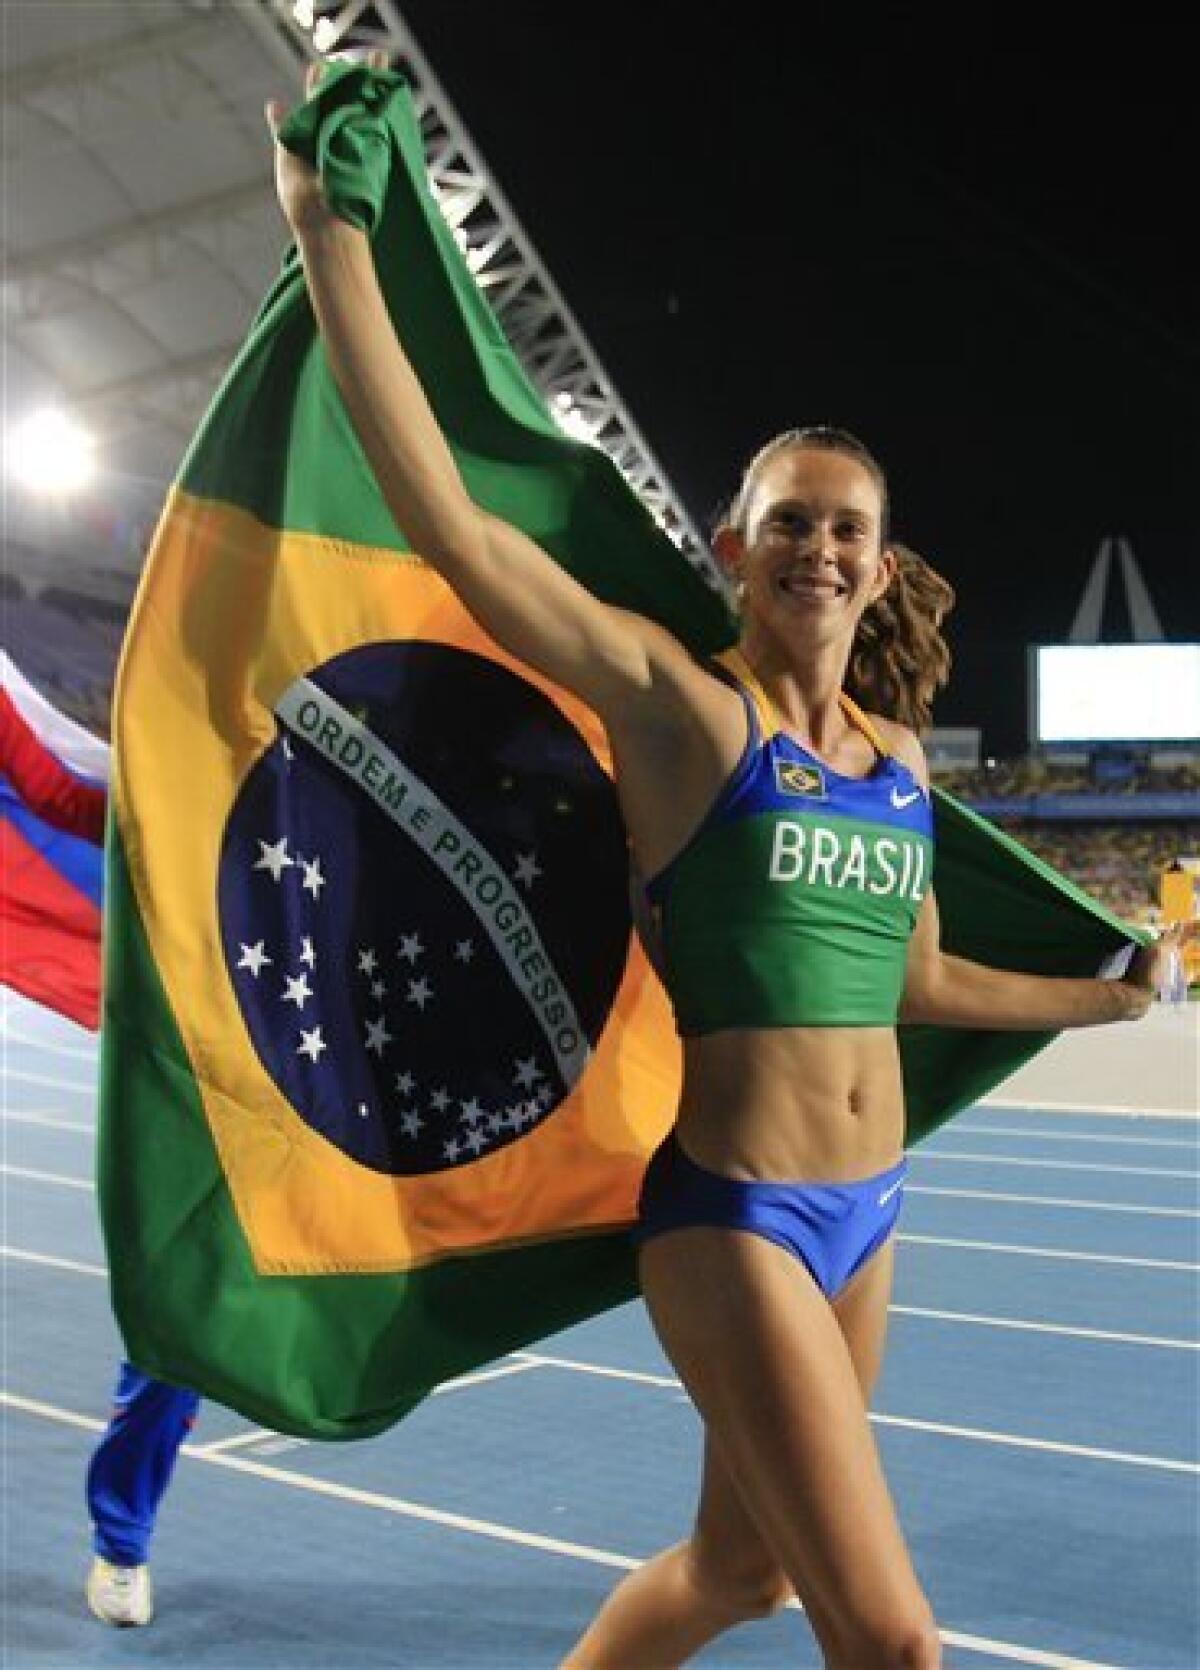 Brazil's Fabiana Murer celebrates winning gold in the Women's Pole Vault final at the World Athletics Championships in Daegu, South Korea, Tuesday, Aug. 30, 2011. (AP Photo/Lee Jin-man)